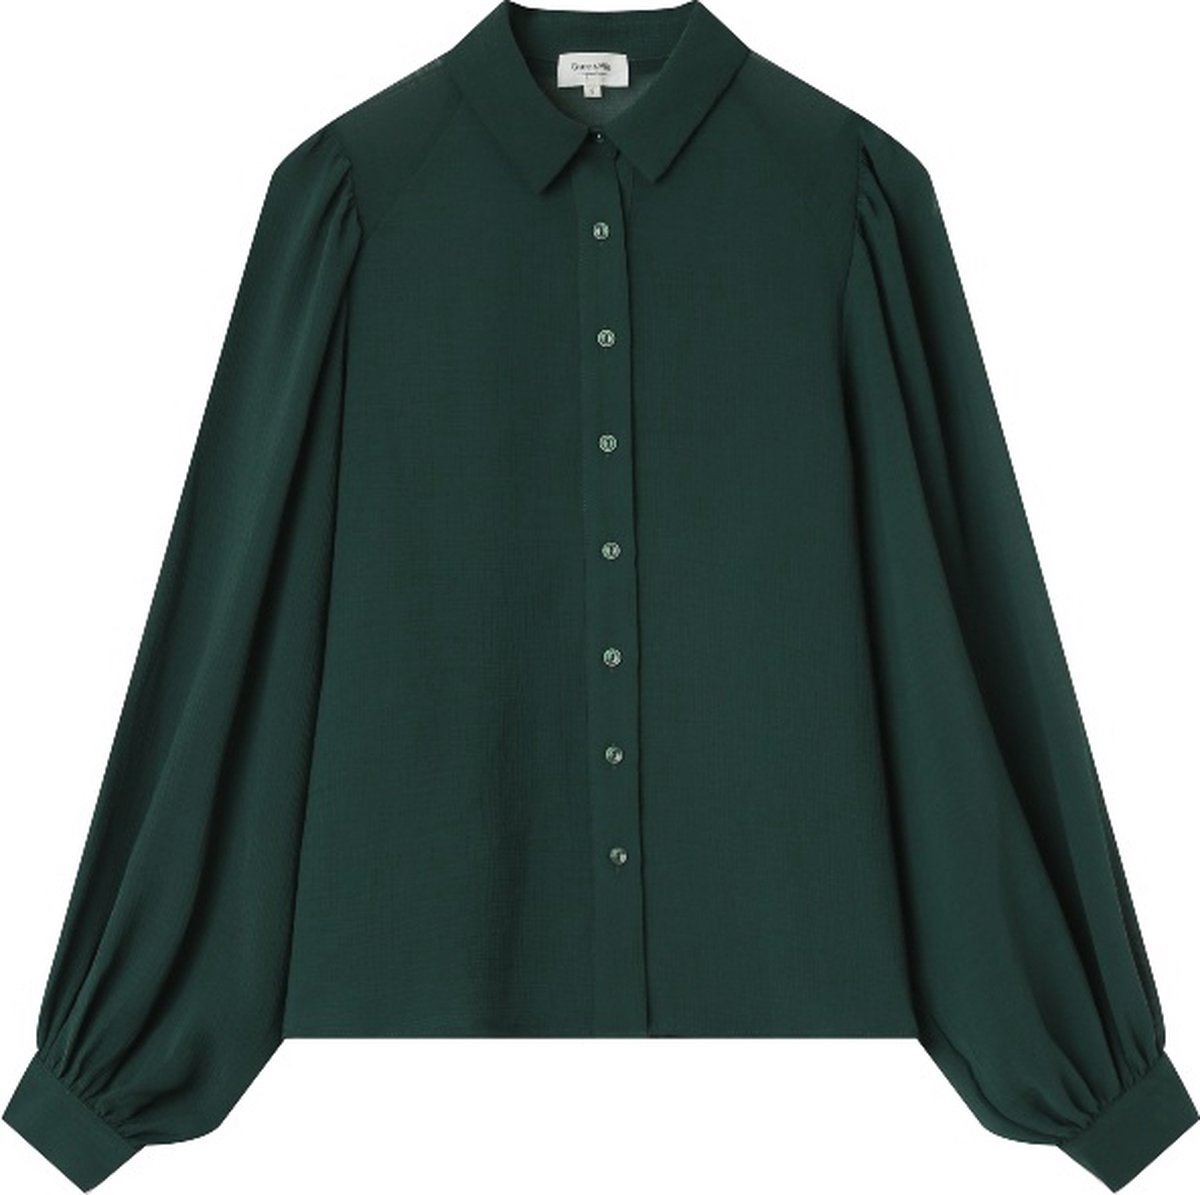 Groene chifon blouse Gora - Grace & Mila - Maat L